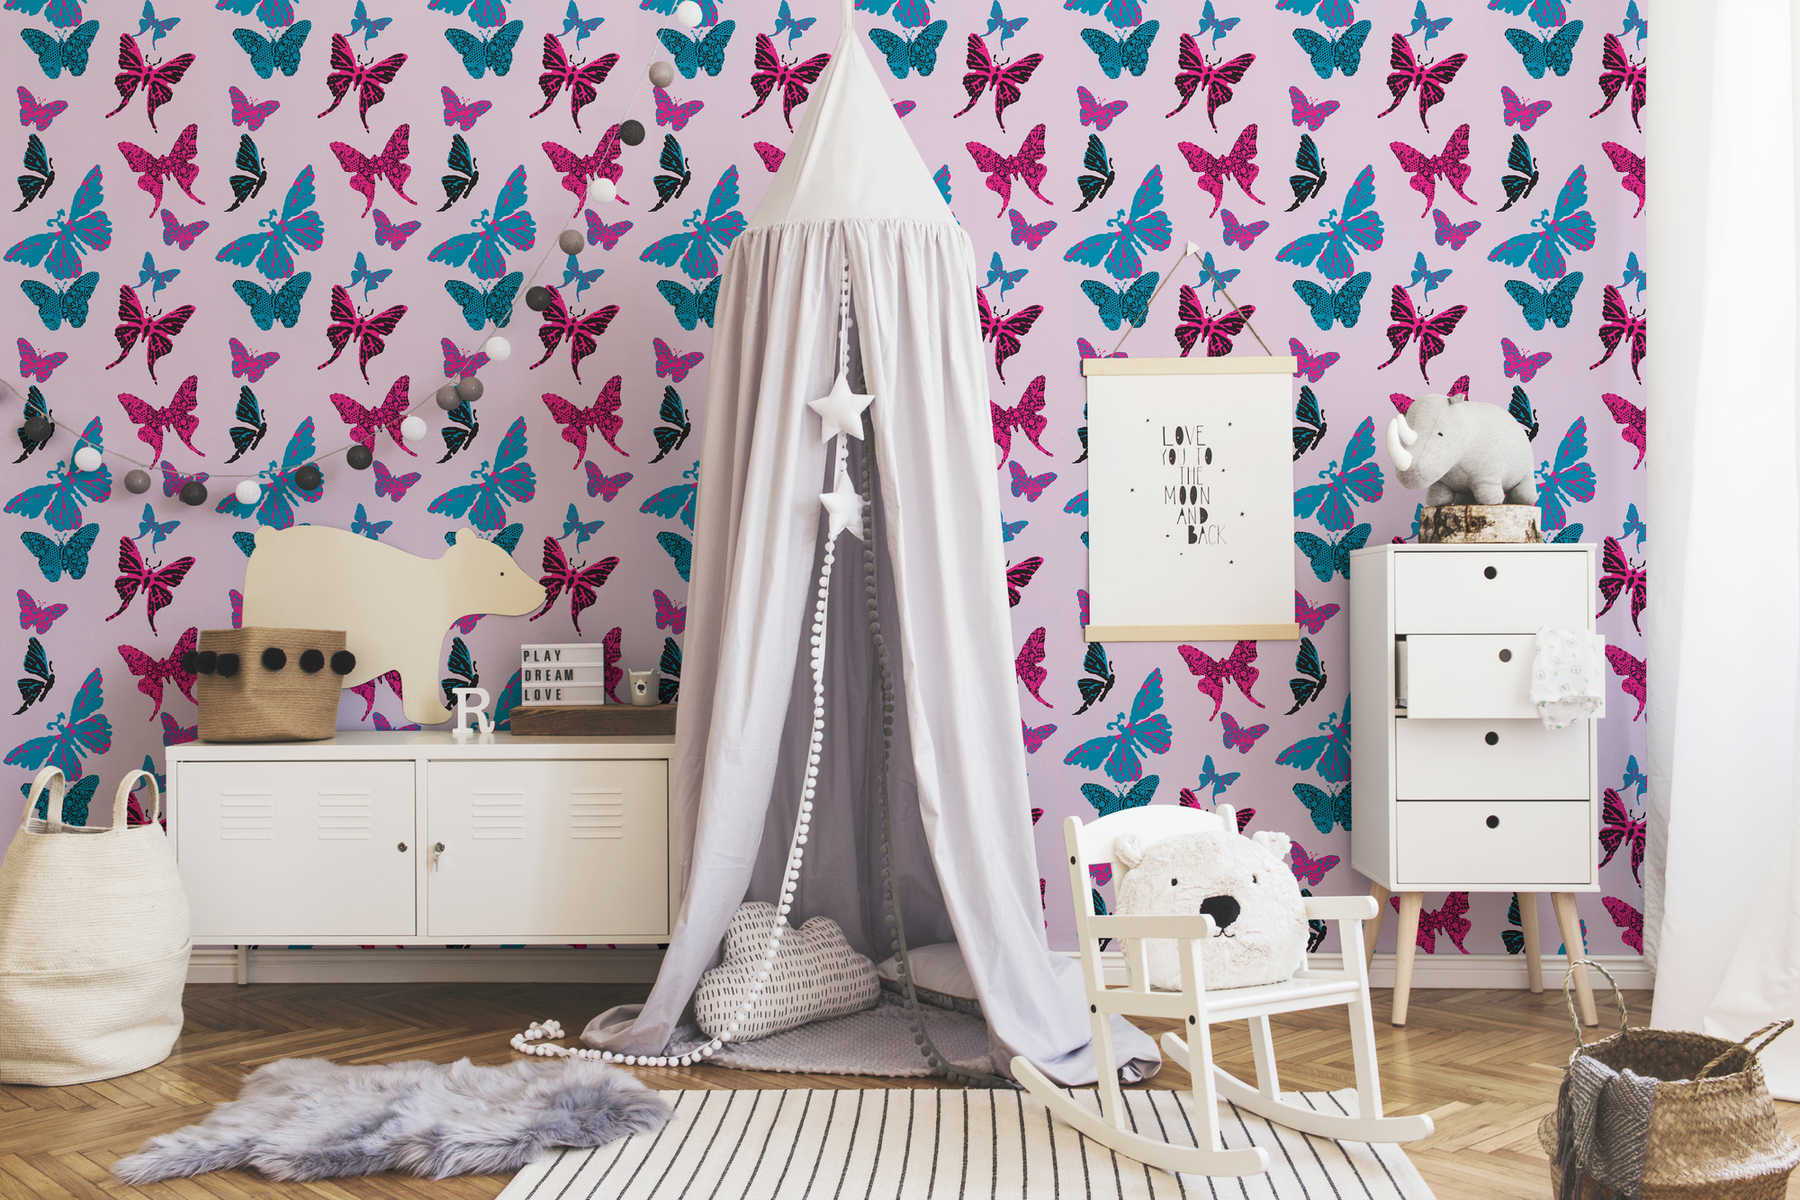             Butterfly wallpaper in graphic design for Nursery- purple, blue
        